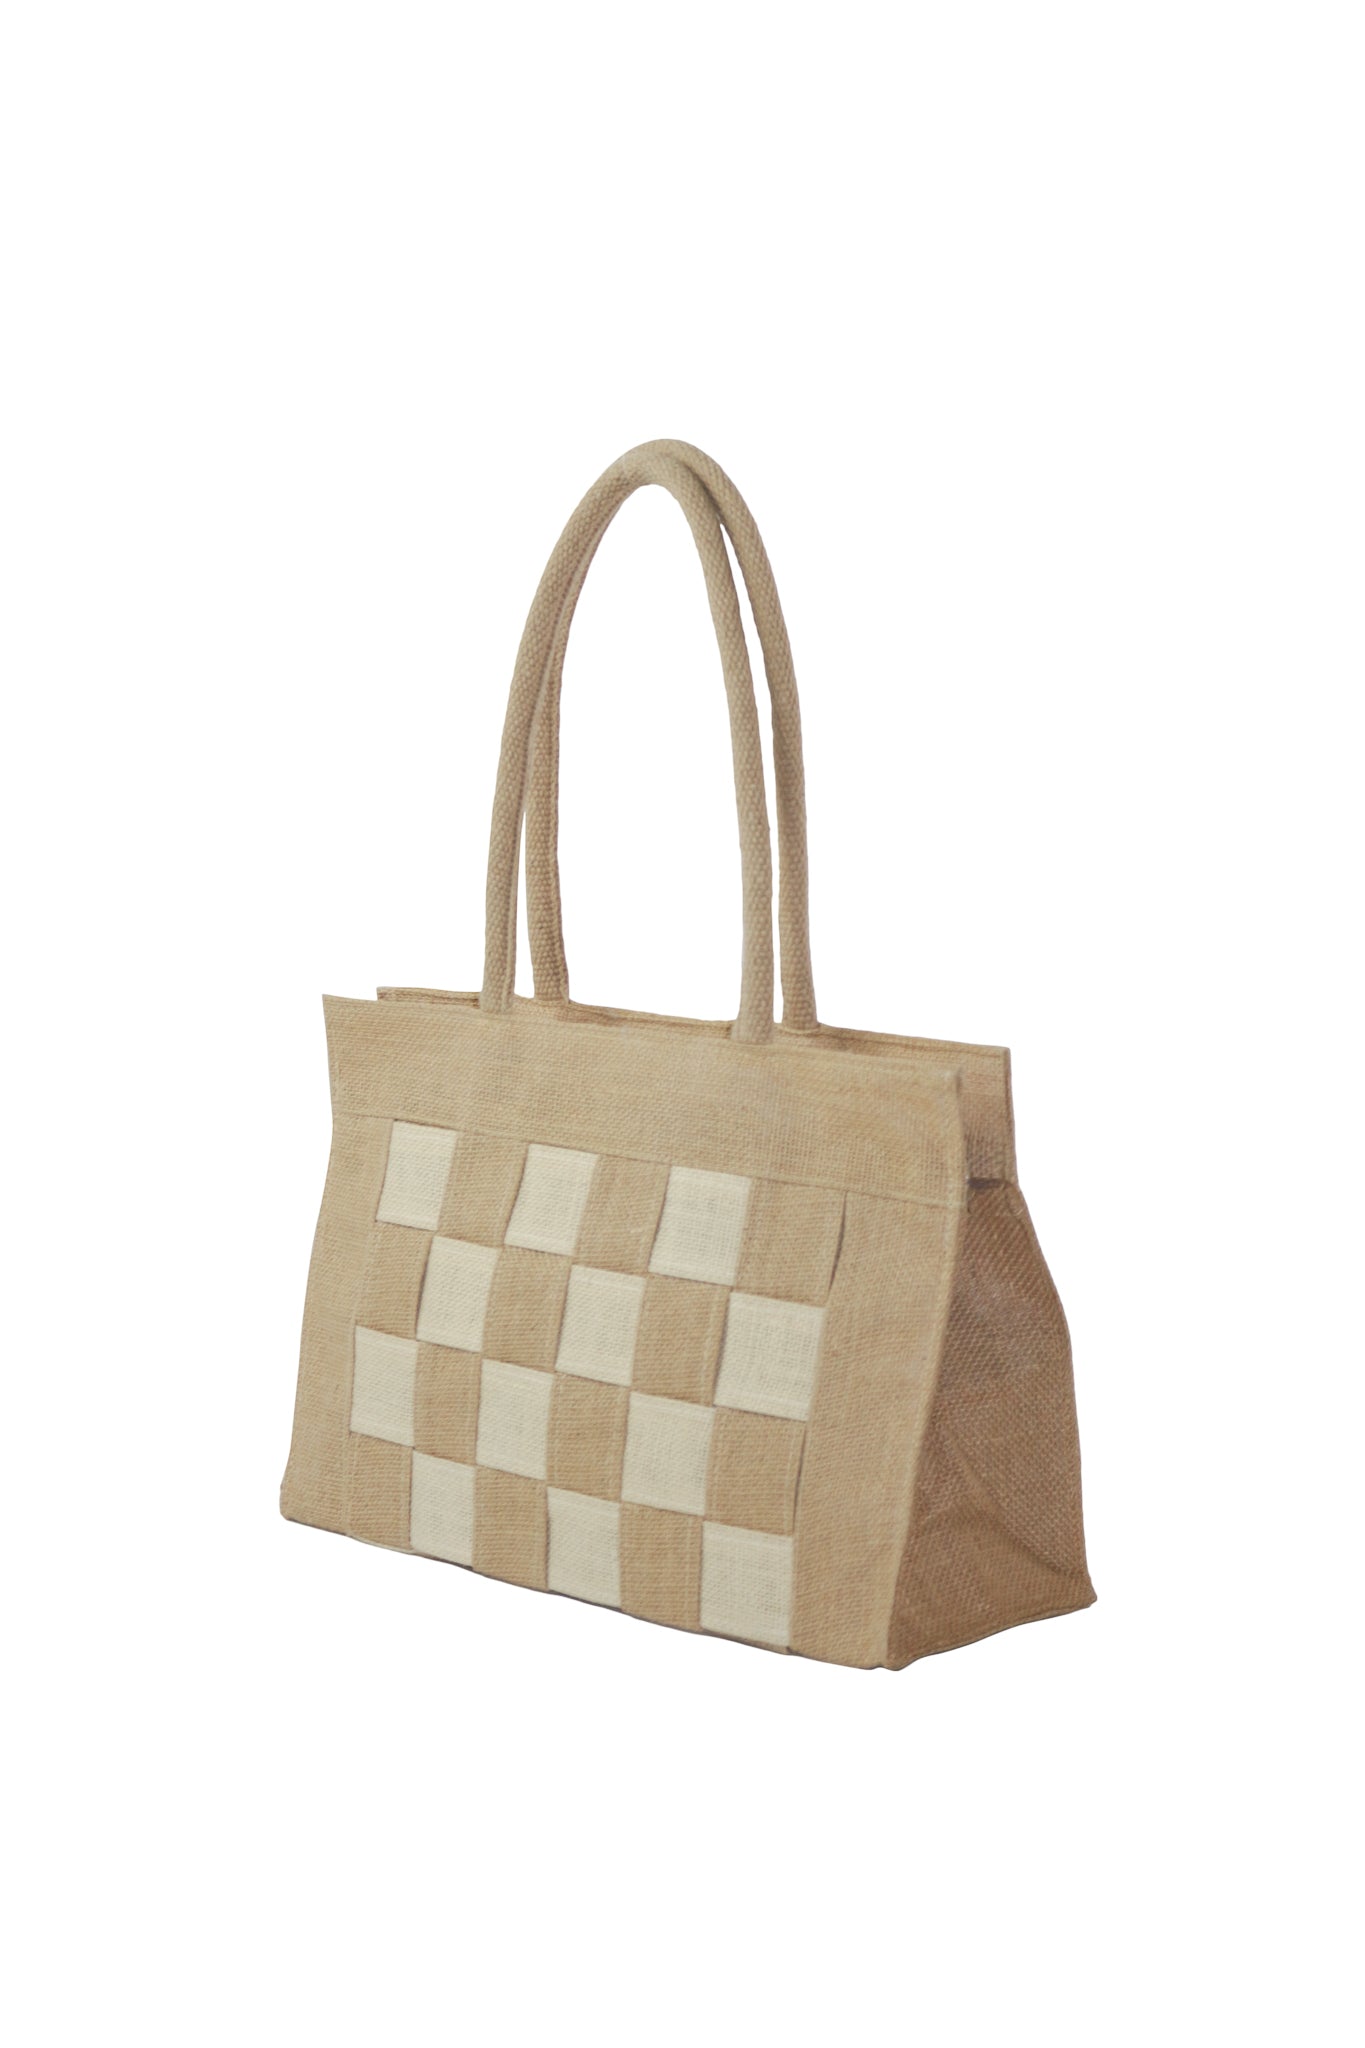 Handwoven/Handmade High-End Jute Handbag